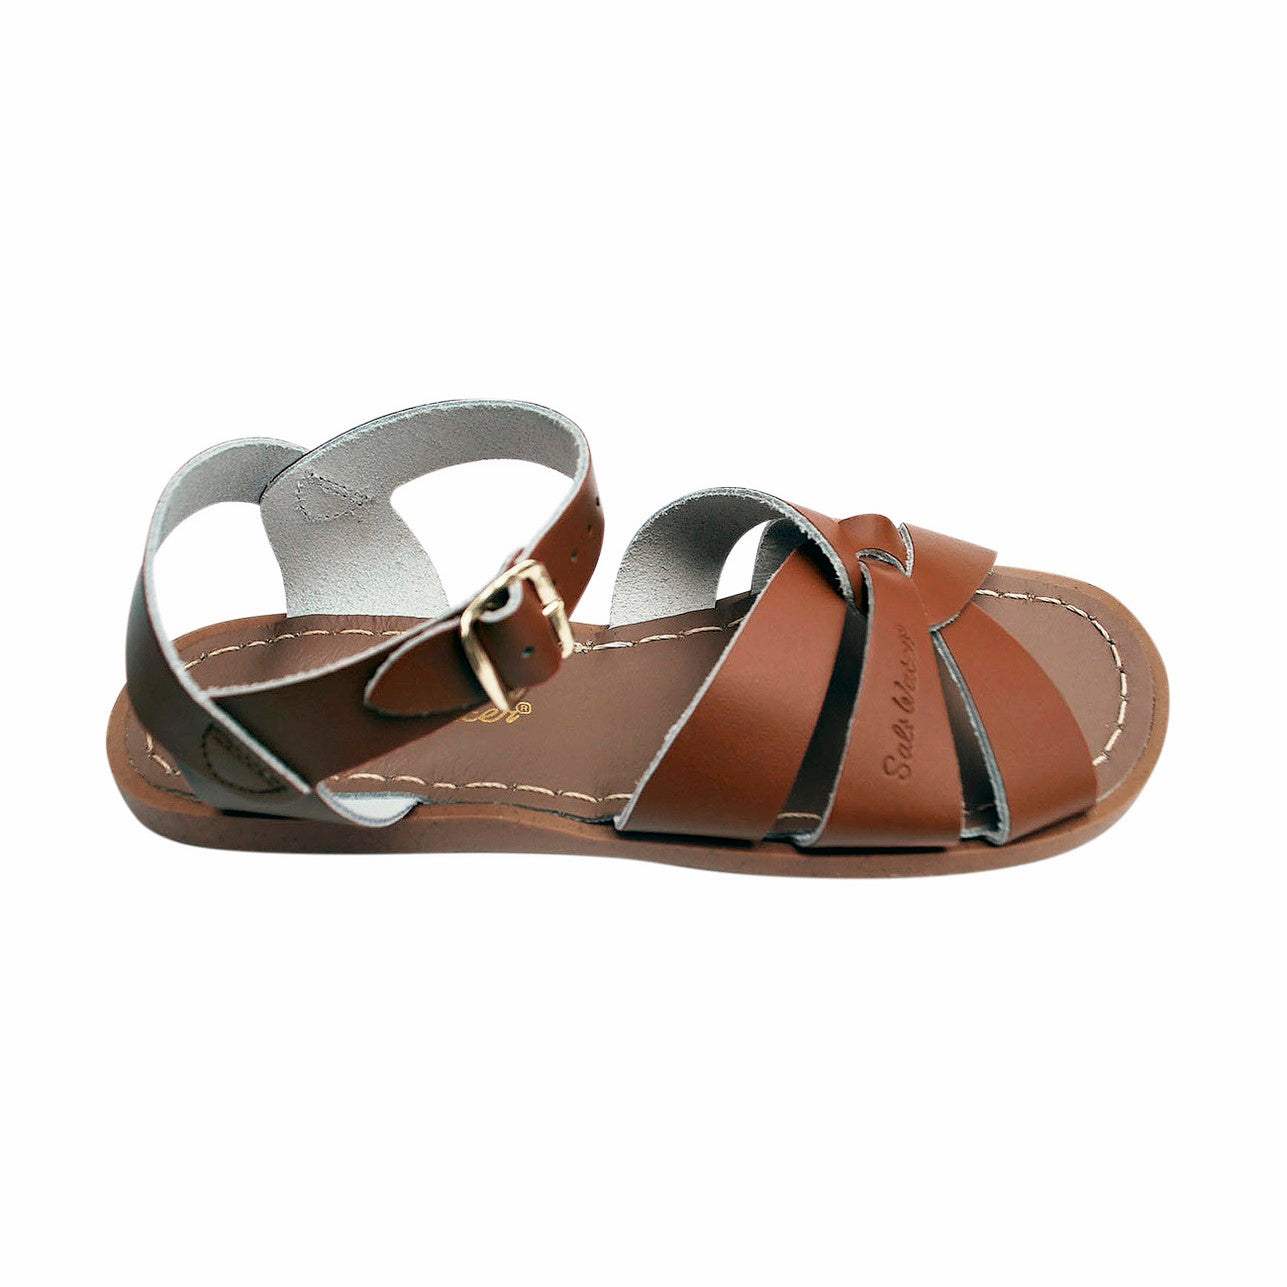 salt water sandals by hoy shoe the original sandal